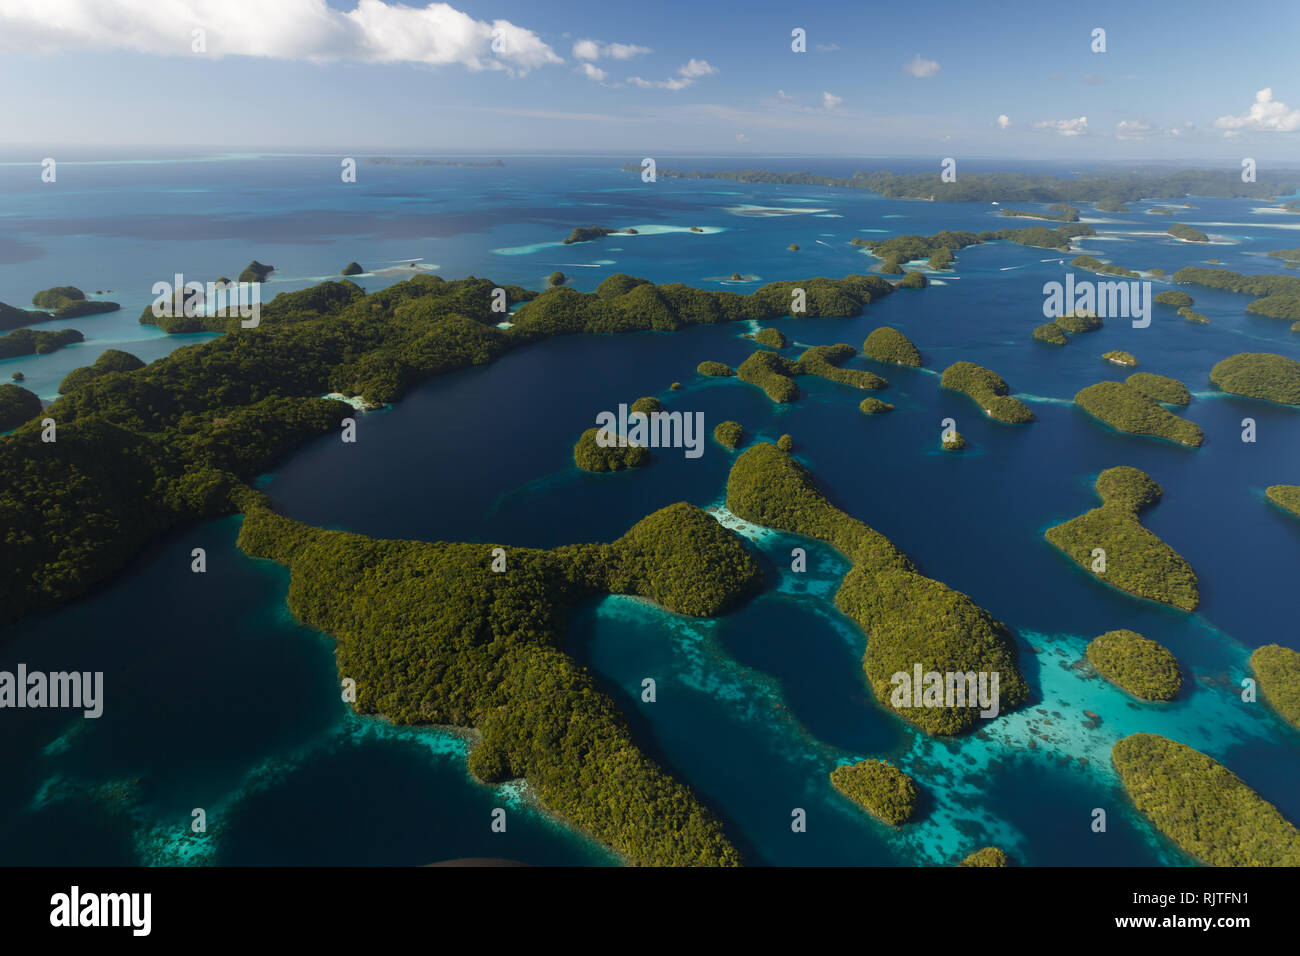 Muster der Inseln Riffe und tiefe türkisblaue Meer Stockfoto